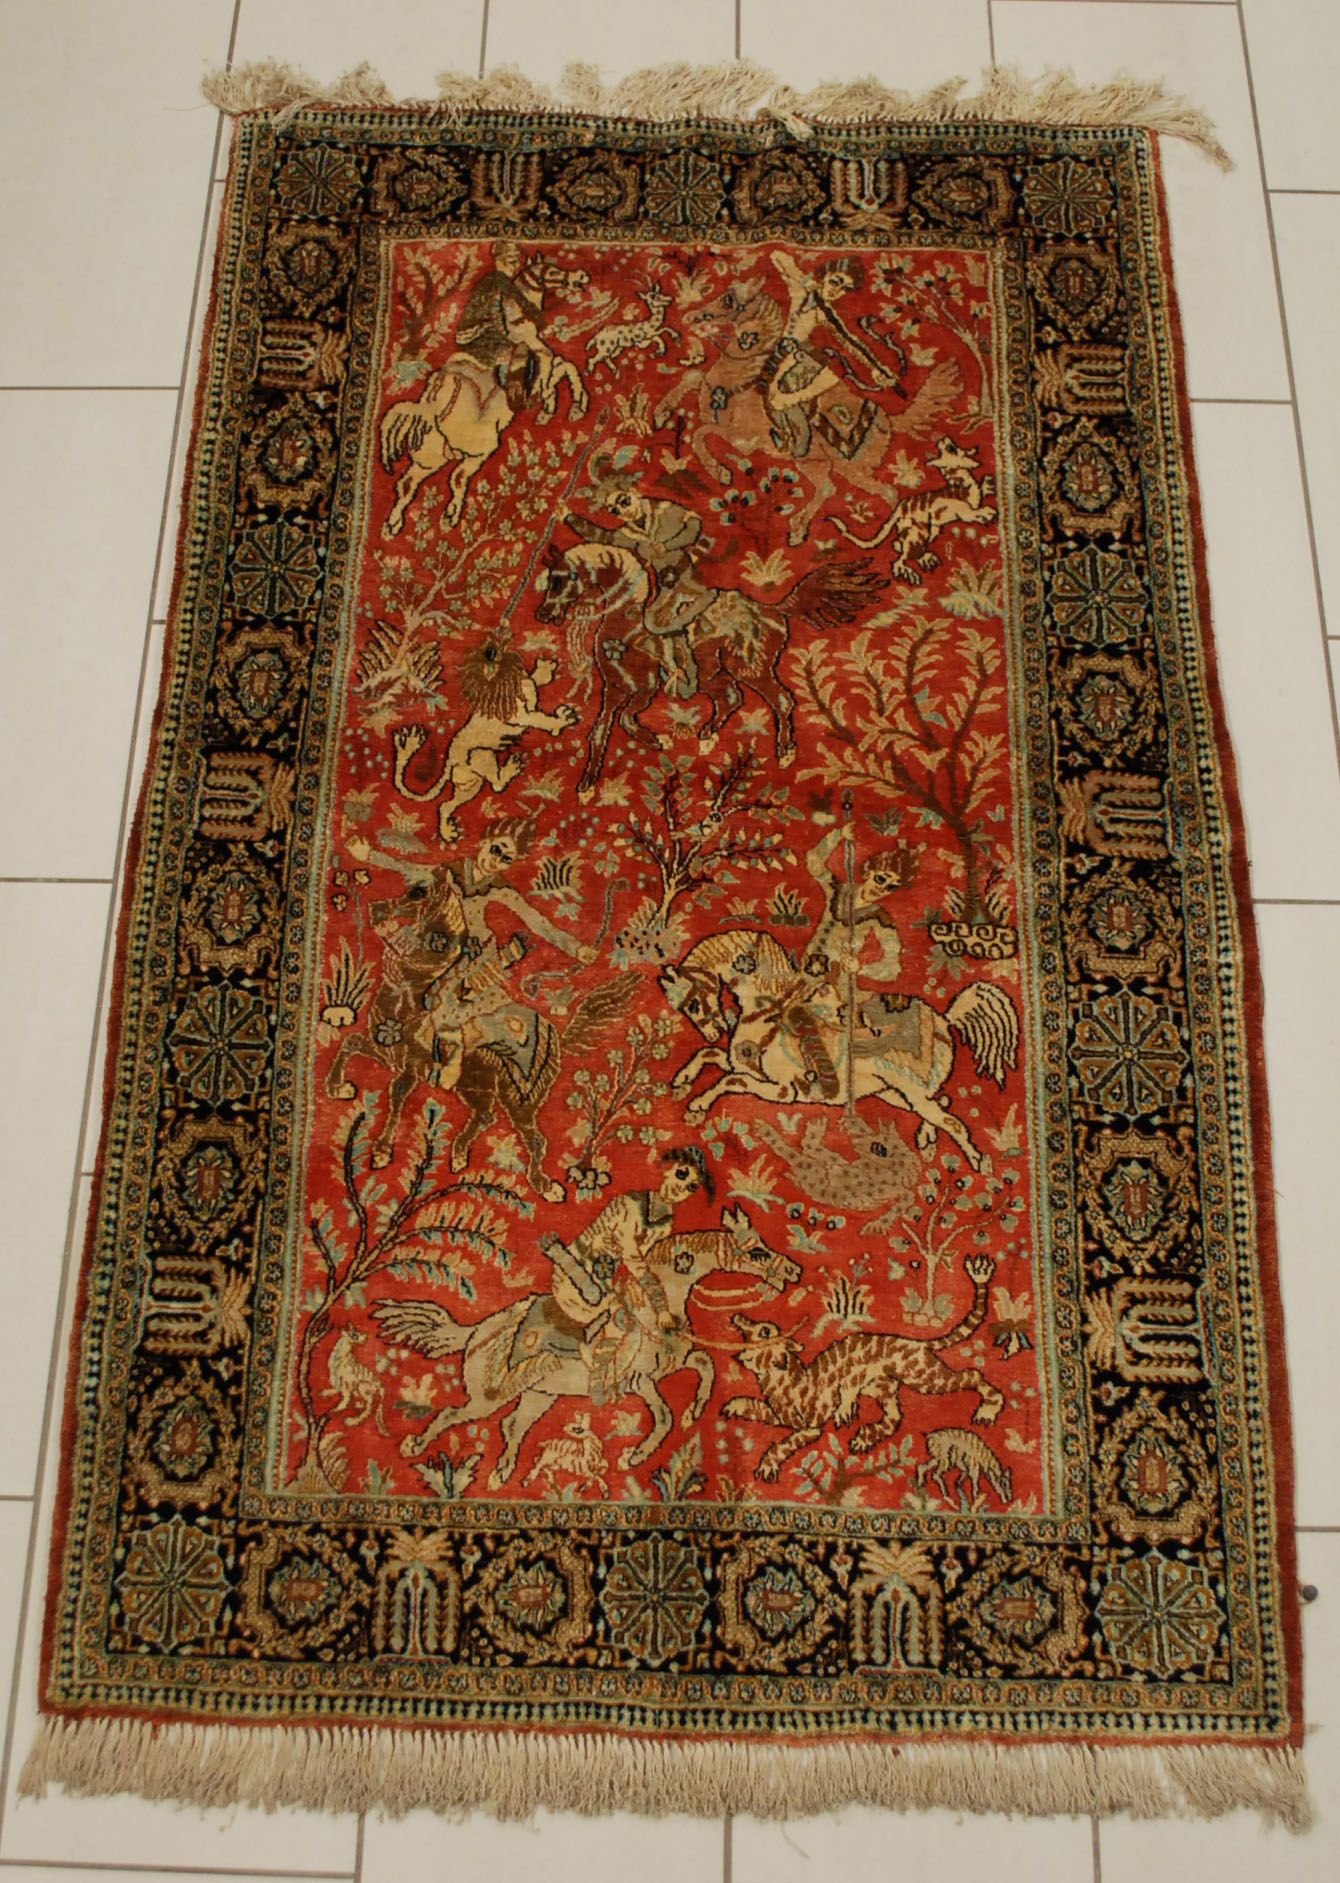 Tapis de chasse Goum en soie. (轻微变色)。

尺寸：177 x 108厘米。